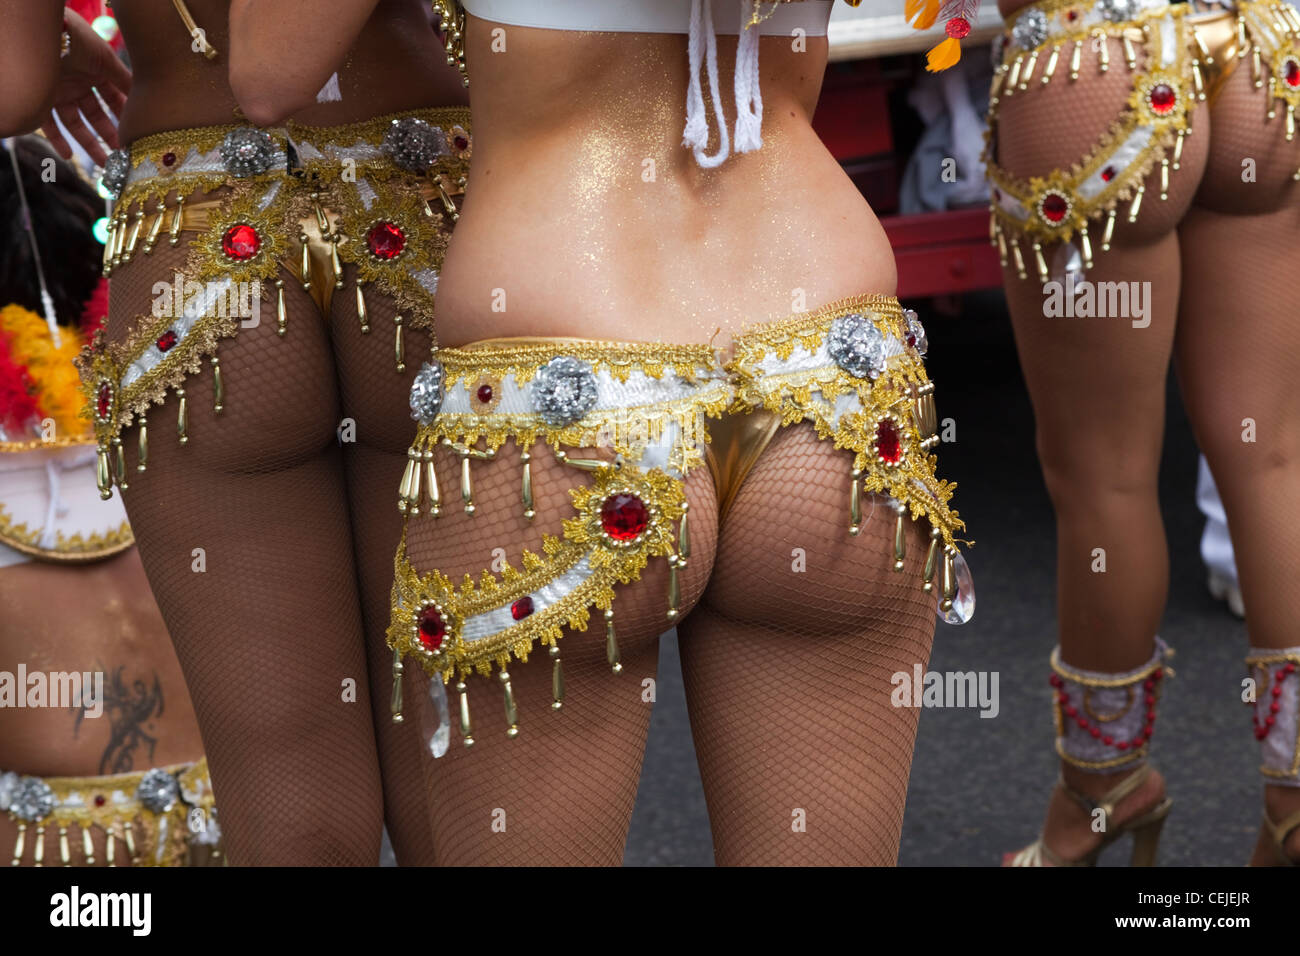 England, London, Notting Hill Carnival, Female Buttocks Stock Photo